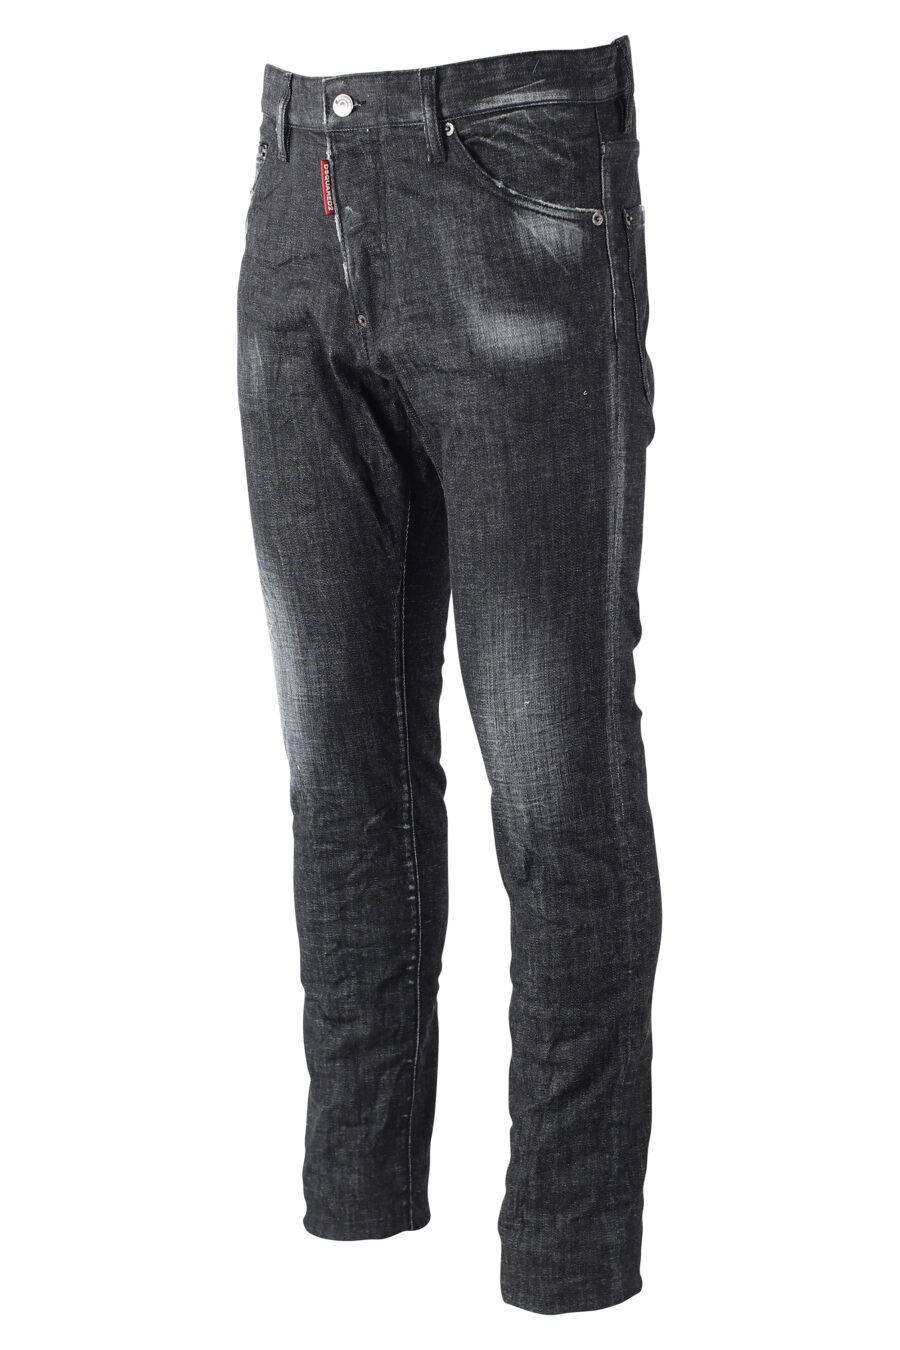 Cool guy jean trousers black semi-worn - IMG 9700